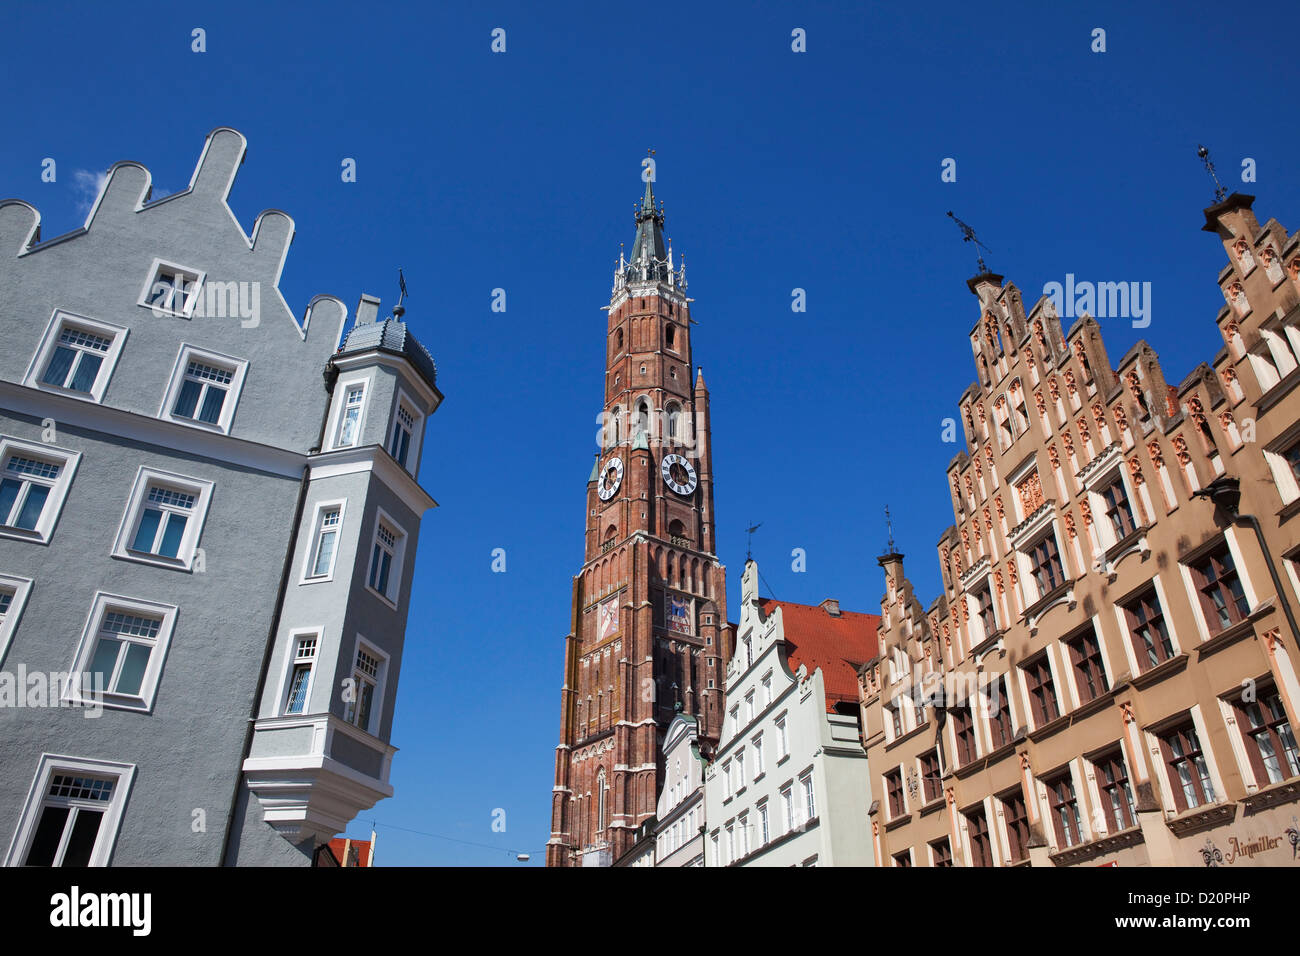 Historic buildings and the steeple of the church of St Martin, Dreifaltigkeitsplatz, Old town, Landshut, Lower Bavaria, Bavaria, Stock Photo